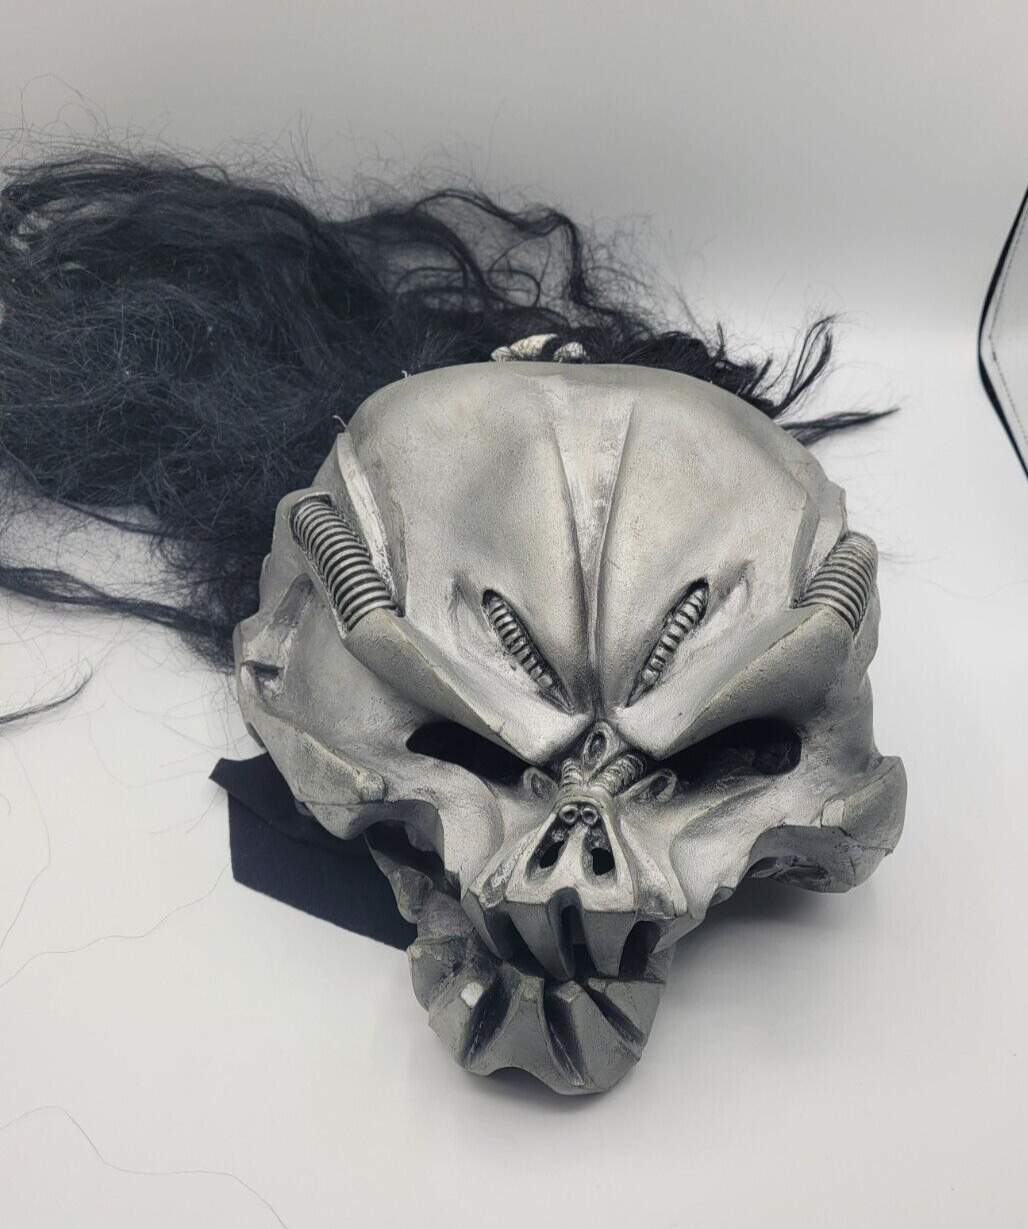 1998 Silver Cyborg Robot Alien Skull W/ Hair The Paper Magic Group Halloween